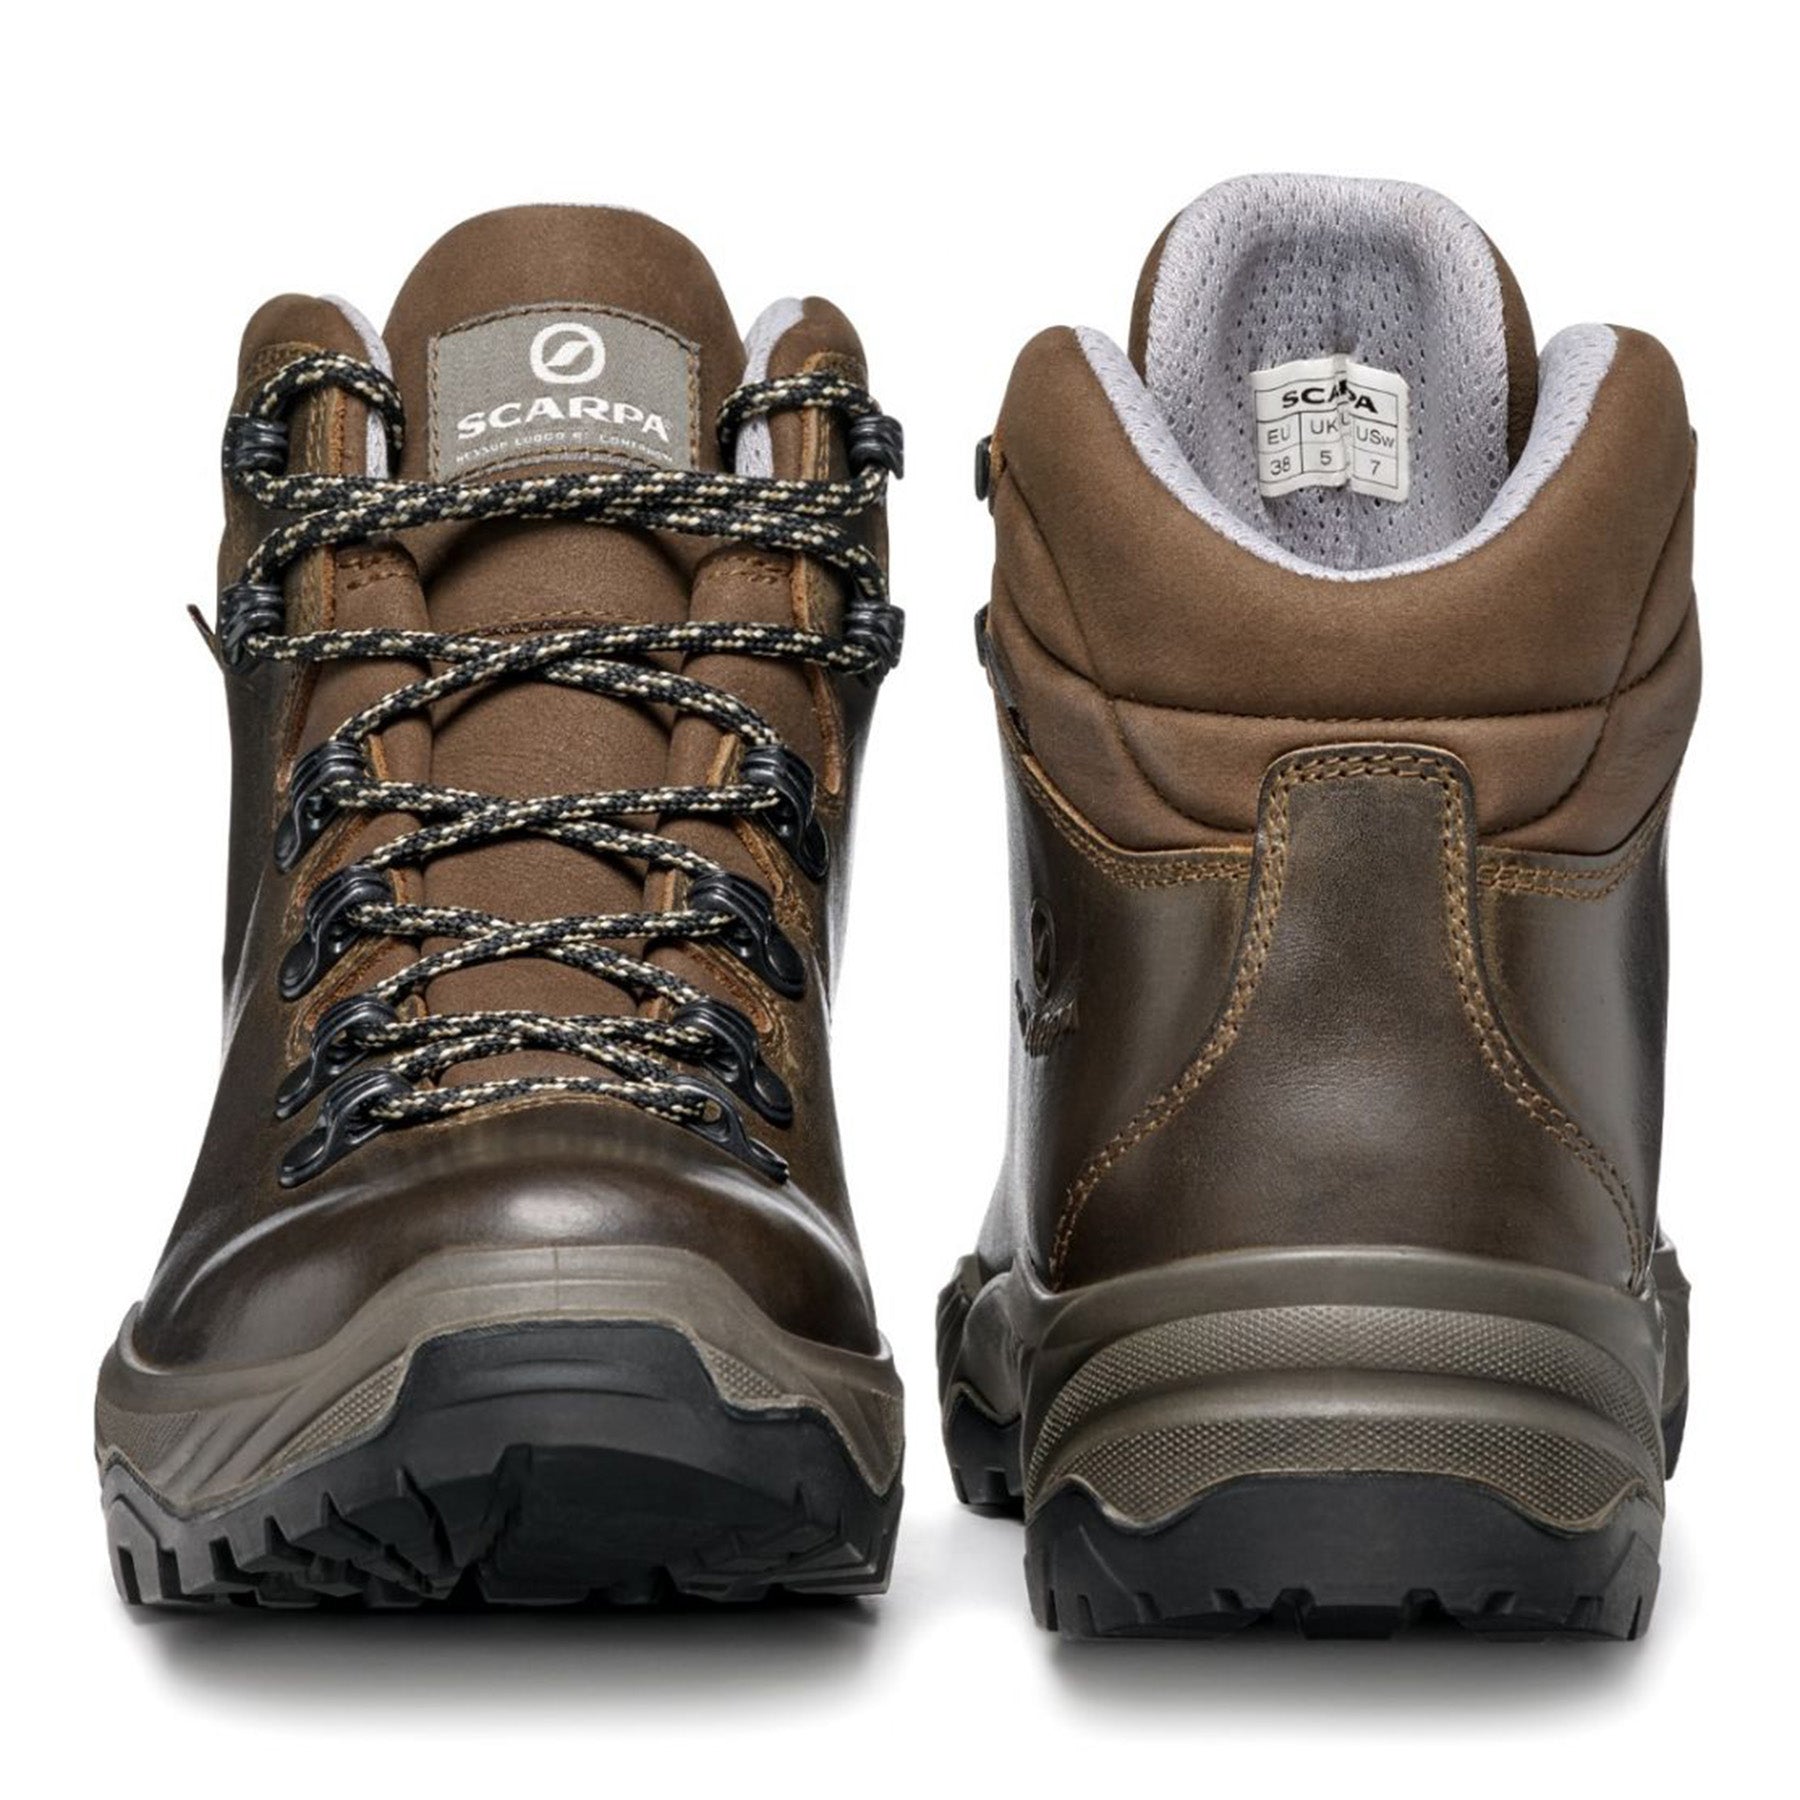 a pair of women's goretex terra hiking boots